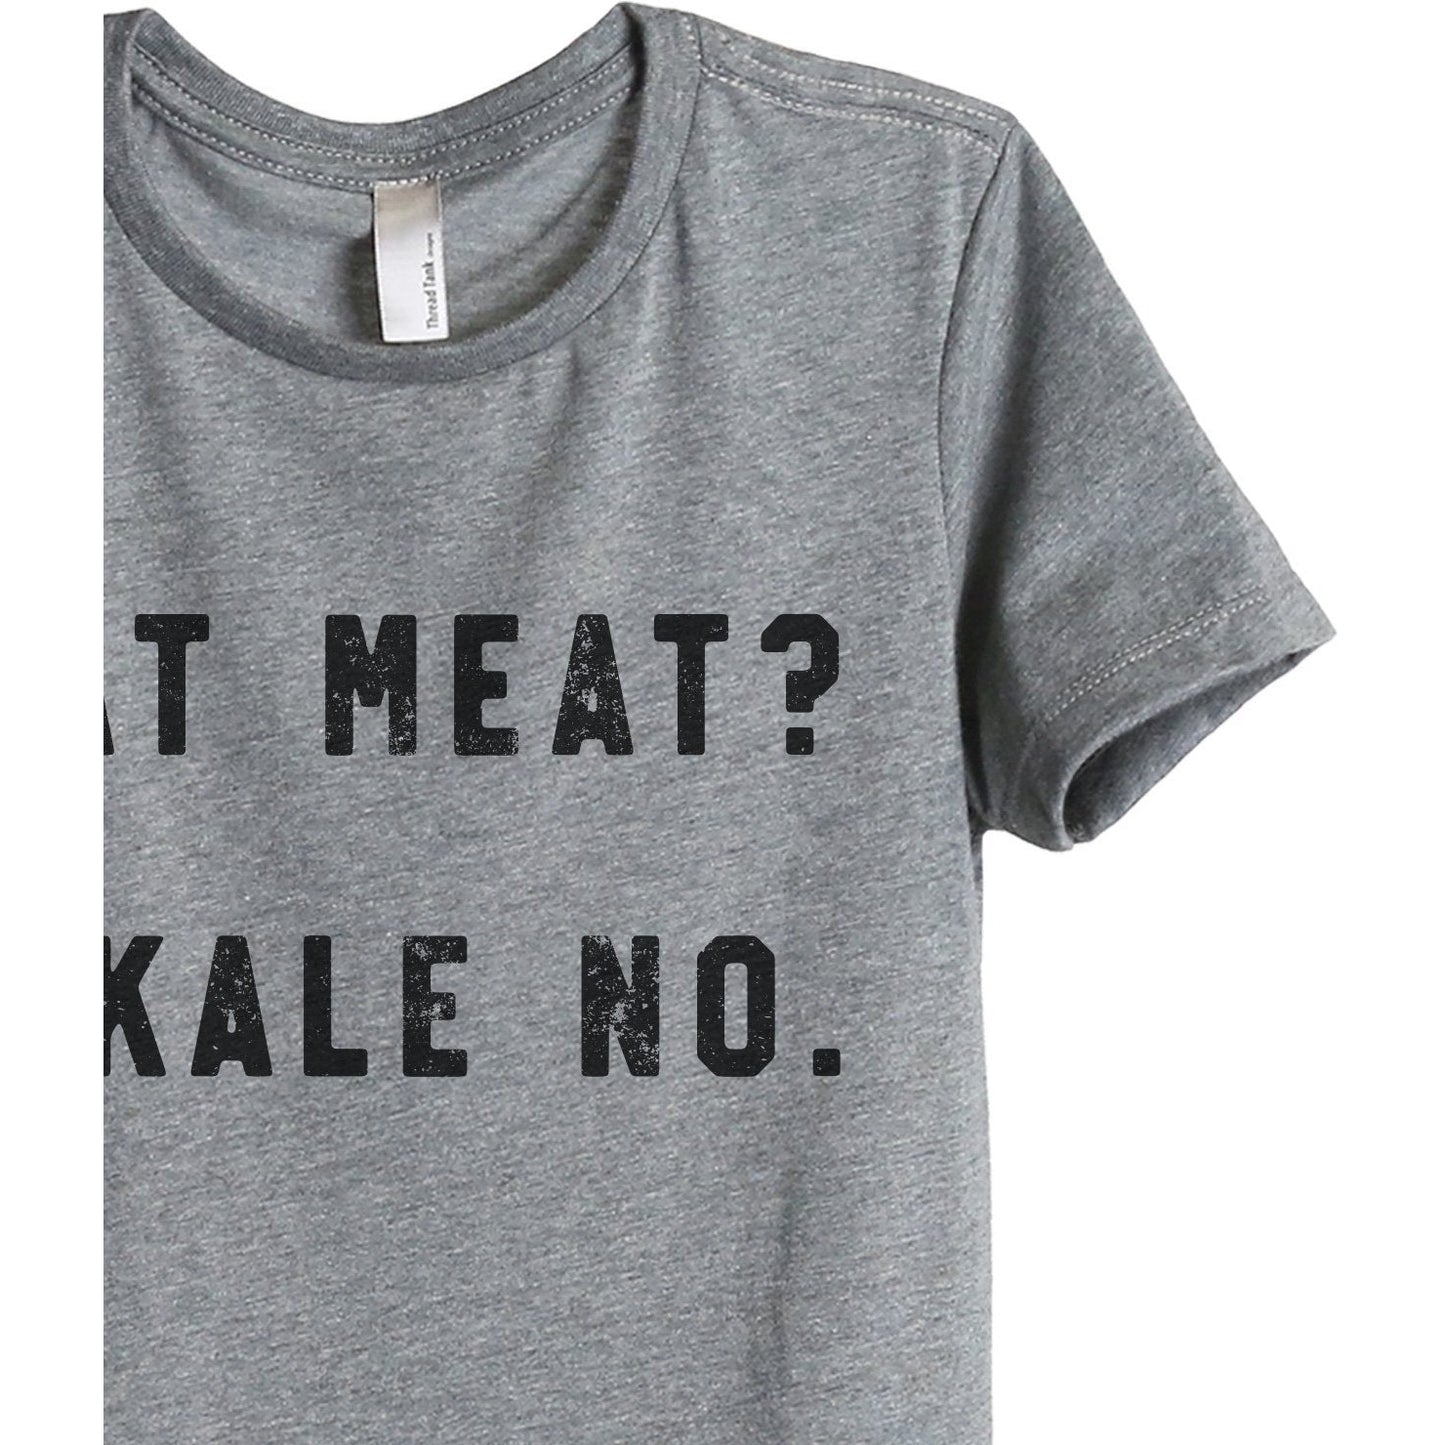 Eat Meat Kale No Women's Relaxed Crewneck T-Shirt Top Tee Heather Grey Closeup Details